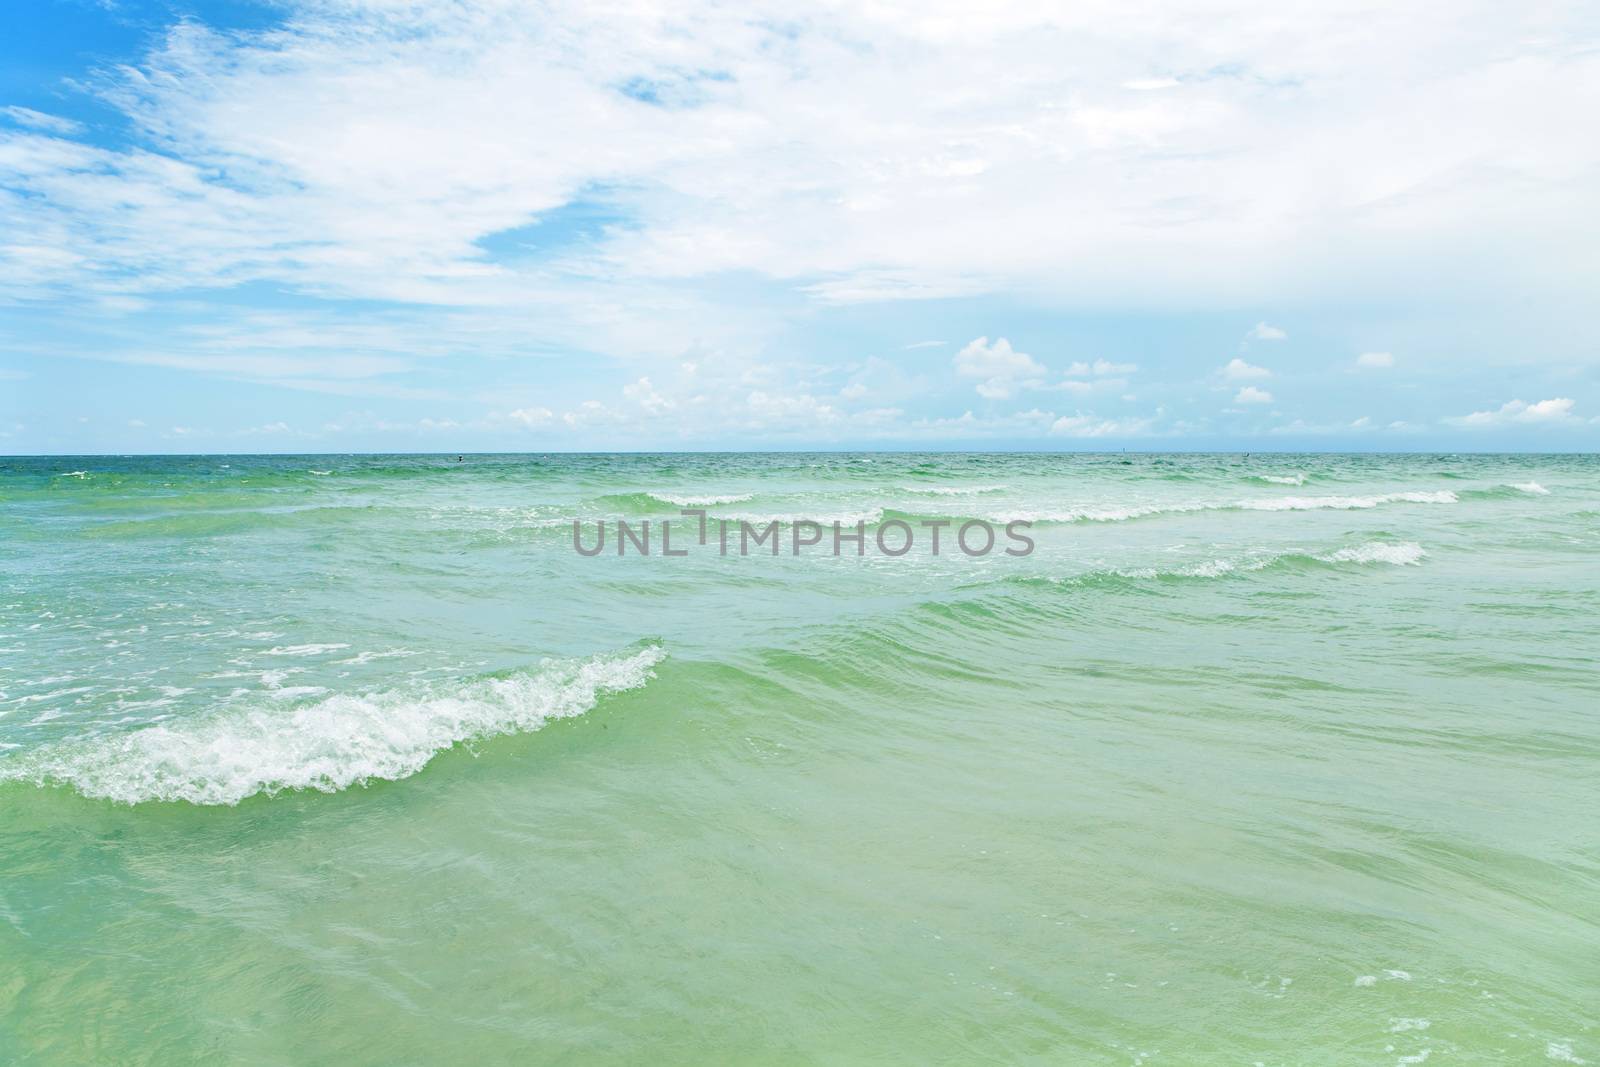 Siesta Key Beach is located on the gulf coast of Sarasota Florida with powdery sand. 